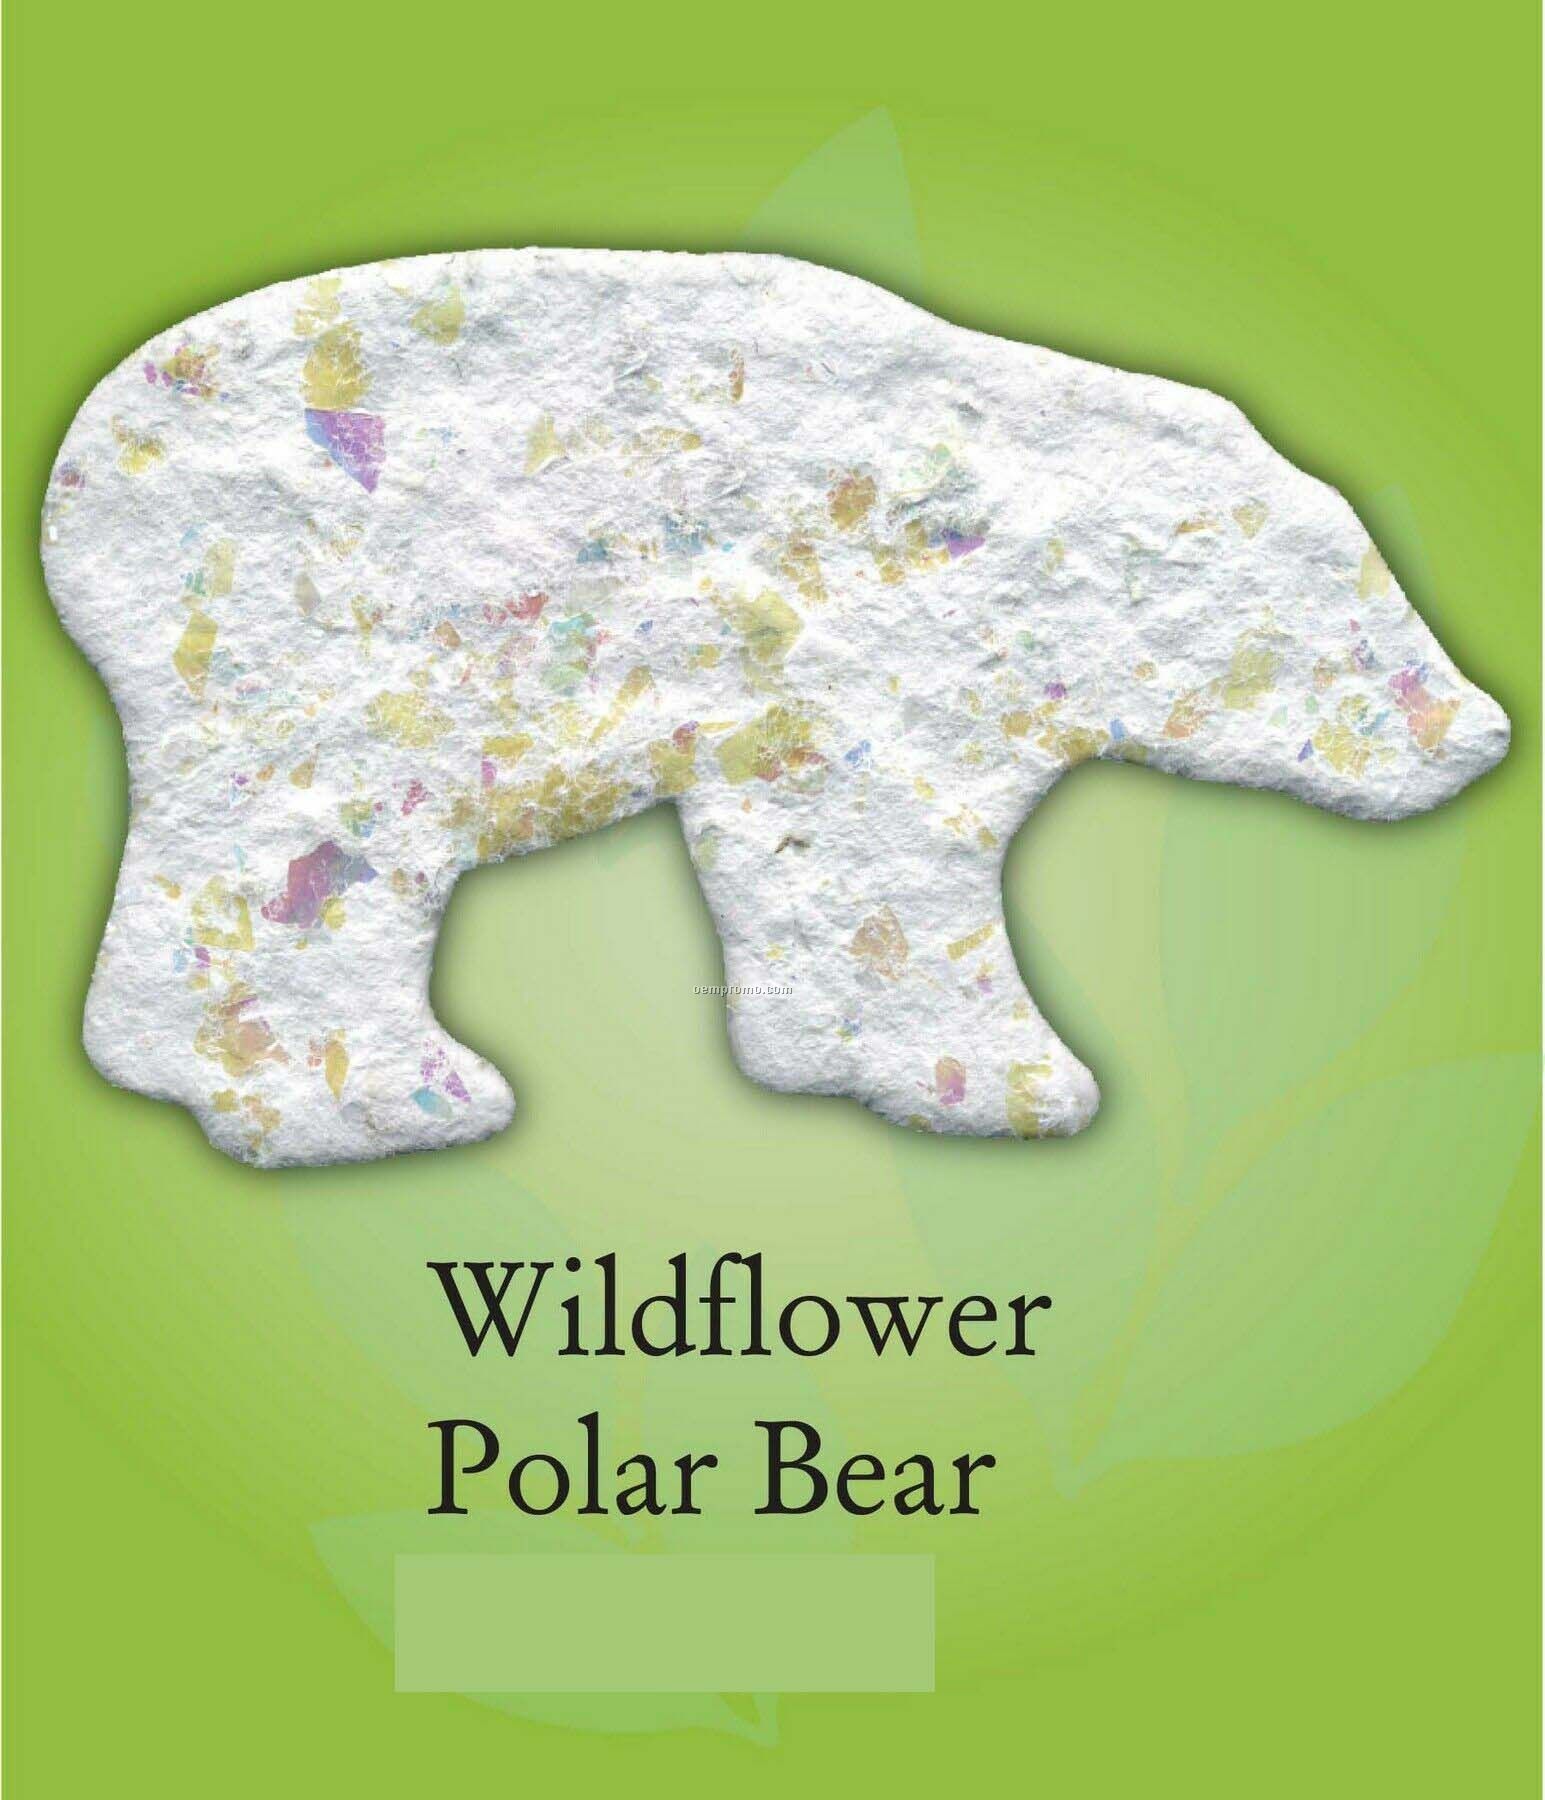 Wildflower Polar Bear Ornament With Embedded Seed